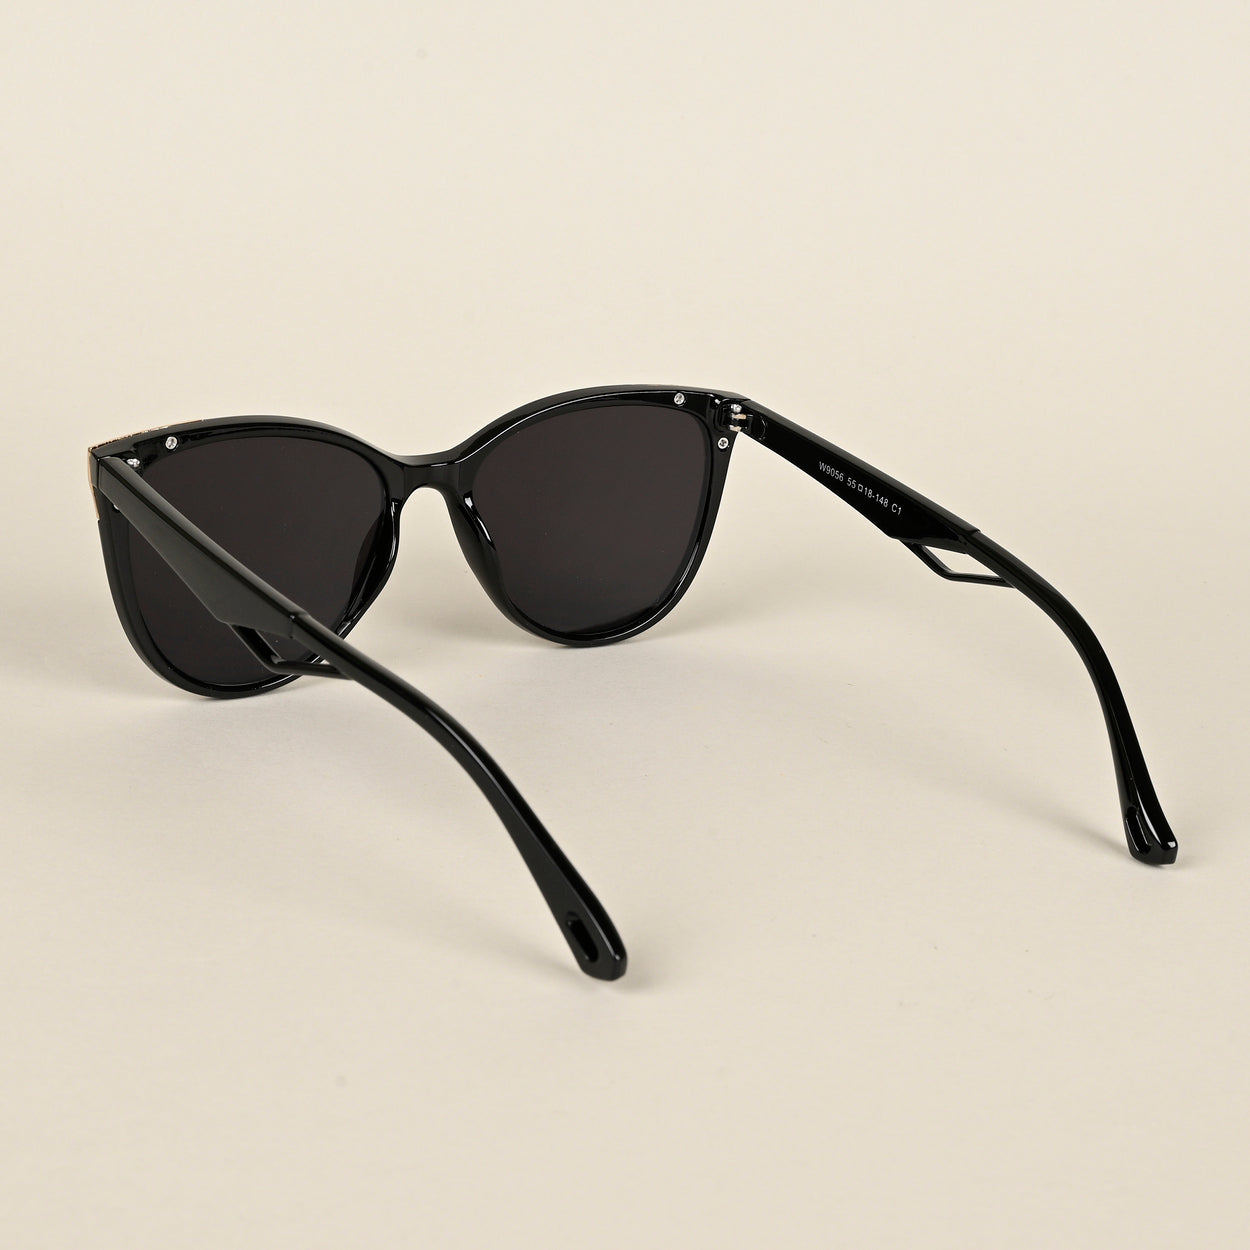 Voyage Black Cateye Sunglasses for Women (W9056MG4228)